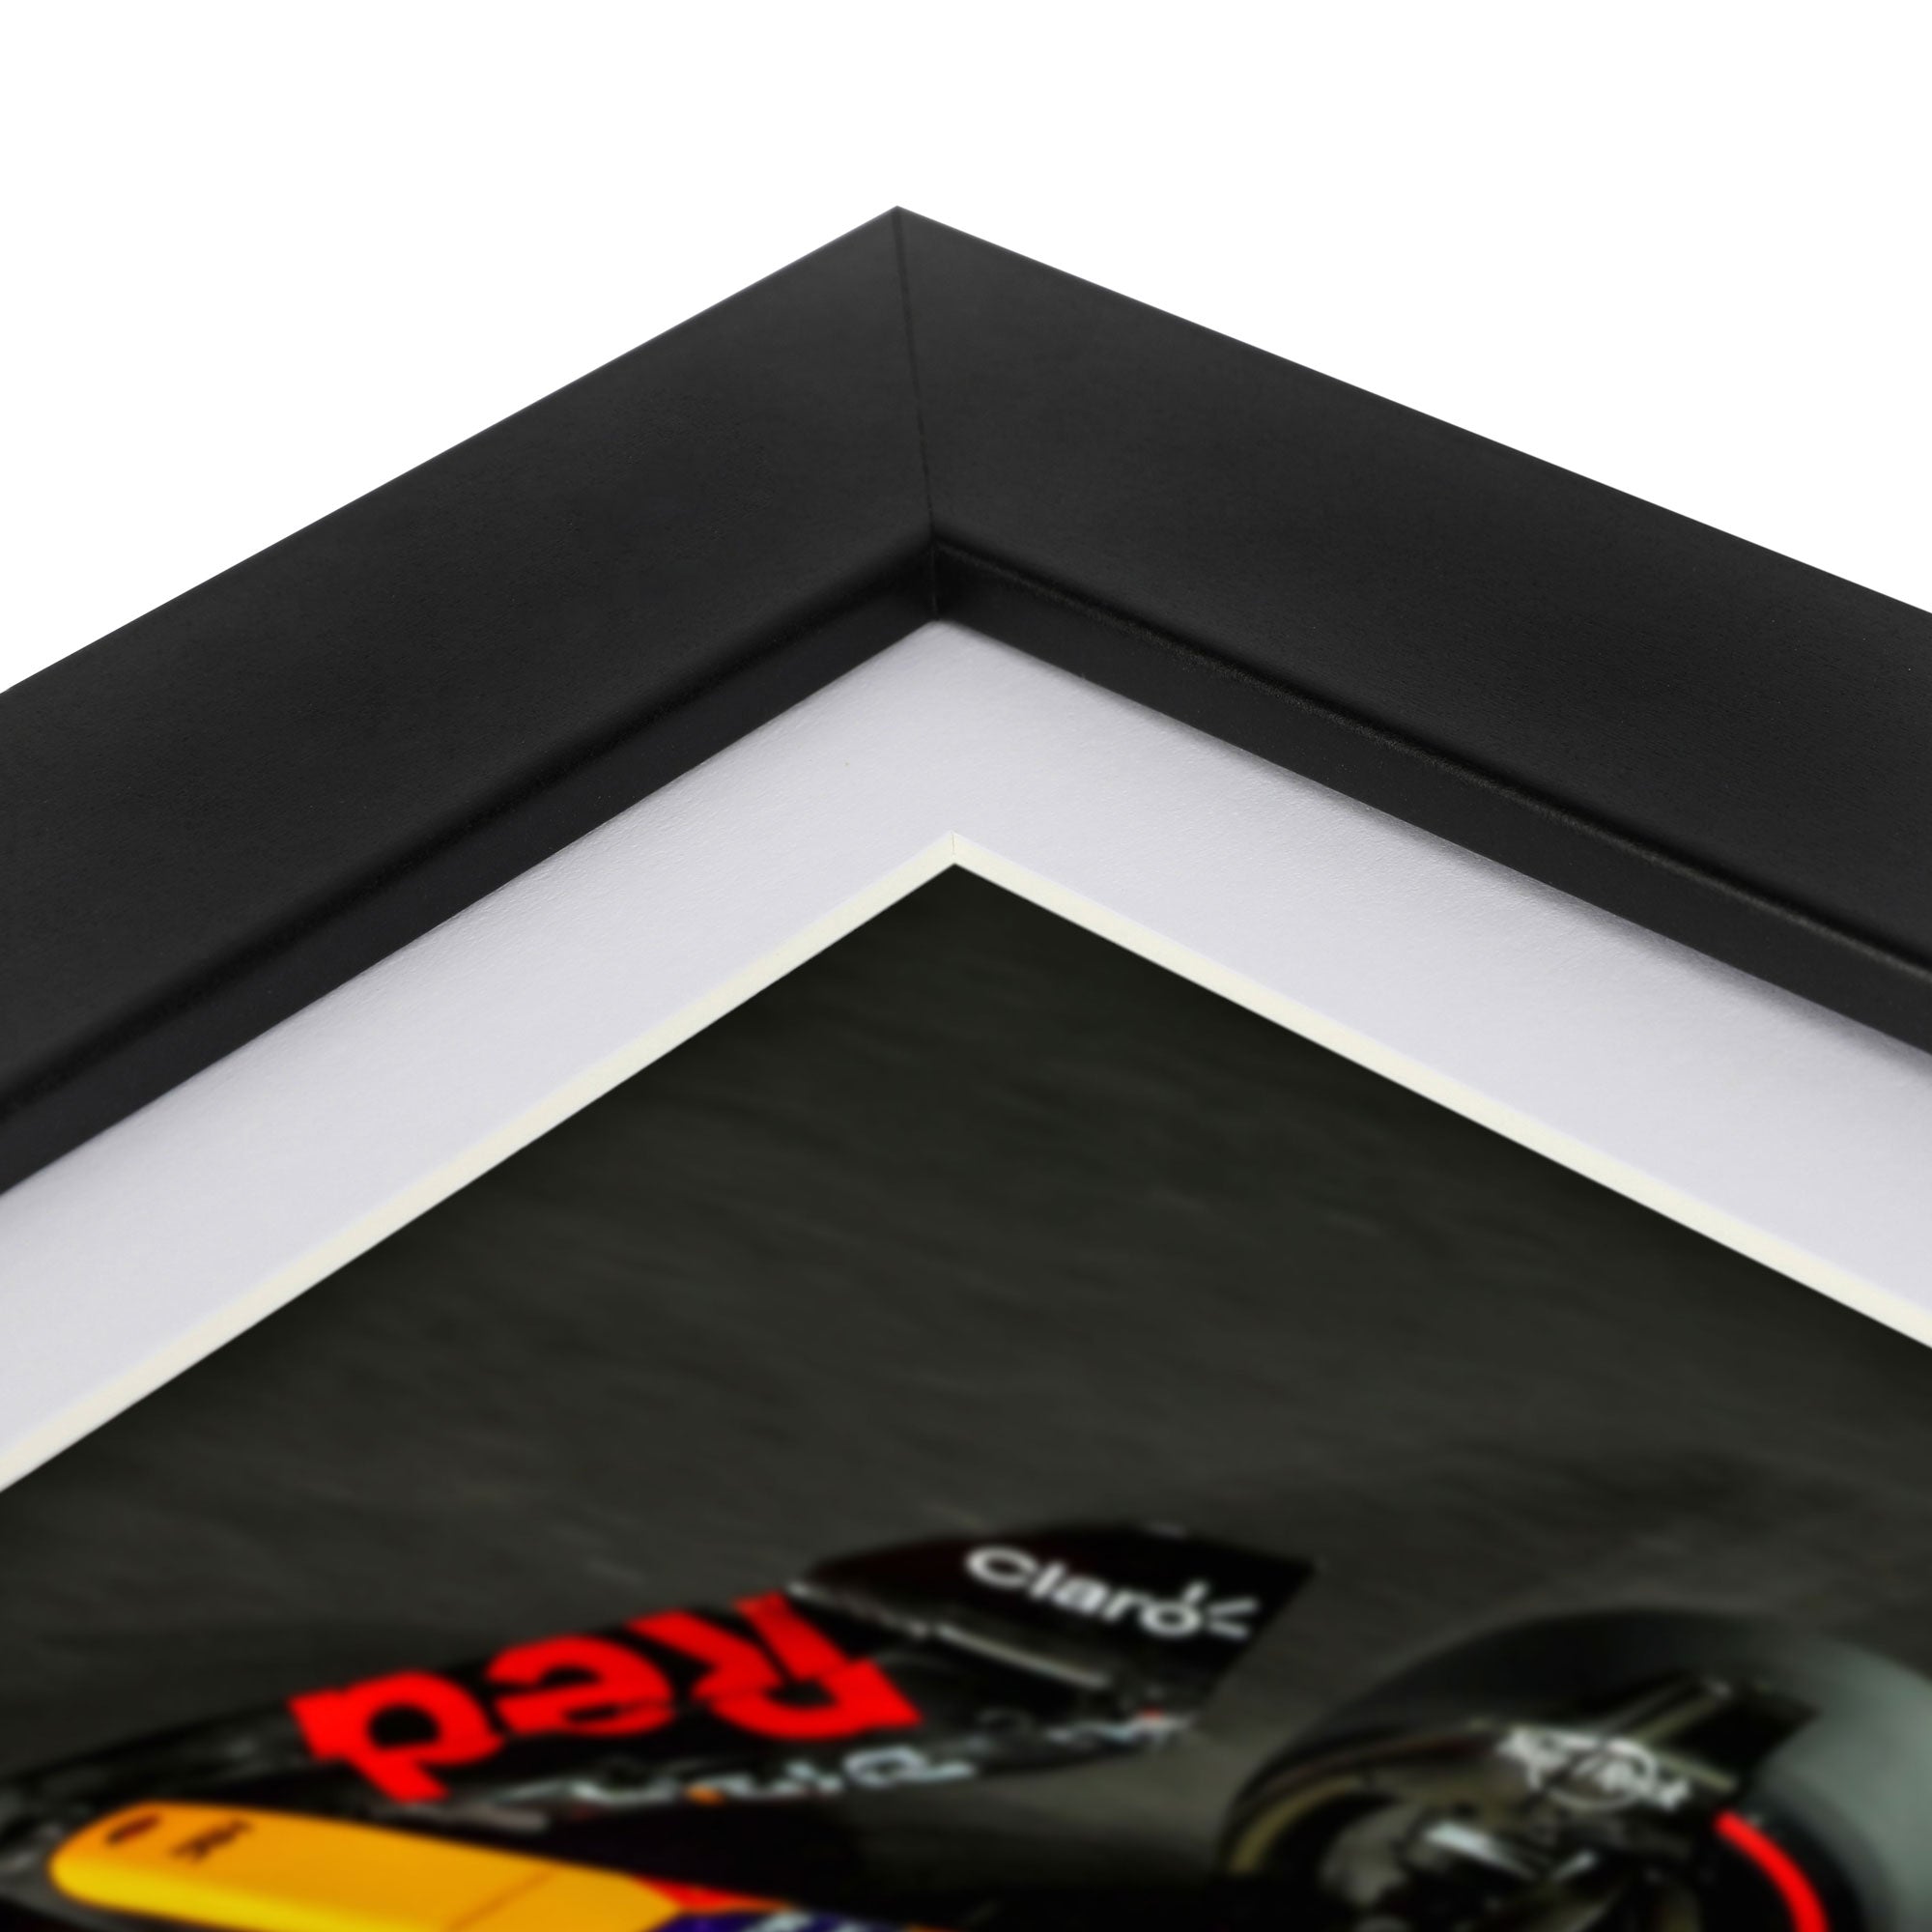 Sergio Perez 2023 Oracle Red Bull Racing Replica Bodywork & Photo – Vegas GP Edition